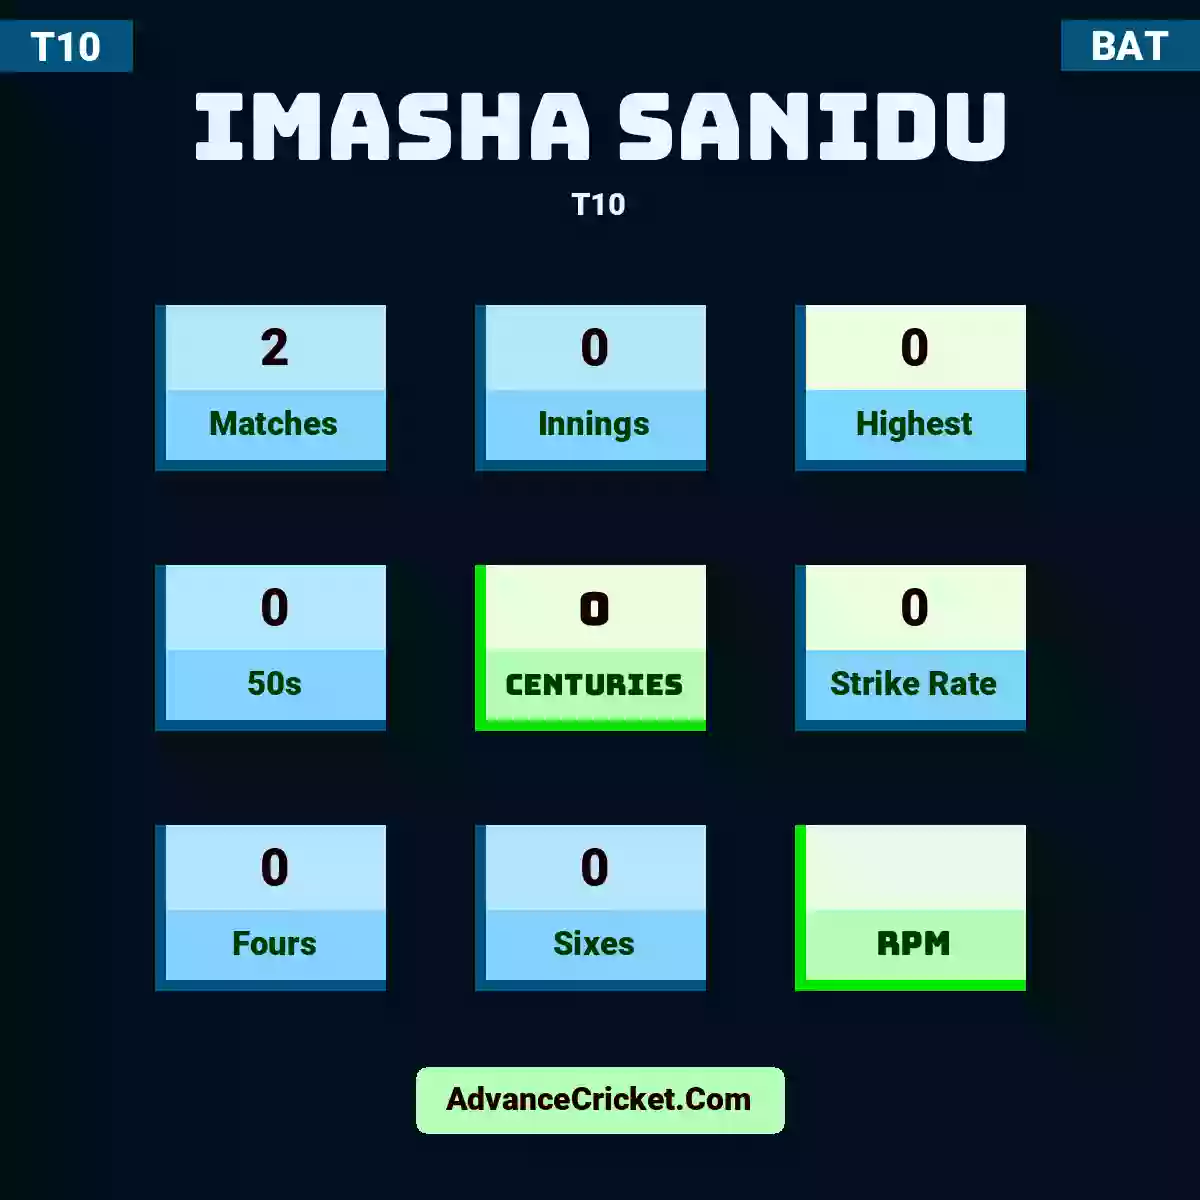 Imasha Sanidu T10 , Imasha Sanidu played 2 matches, scored 0 runs as highest, 0 half-centuries, and 0 centuries, with a strike rate of 0. I.Sanidu hit 0 fours and 0 sixes.